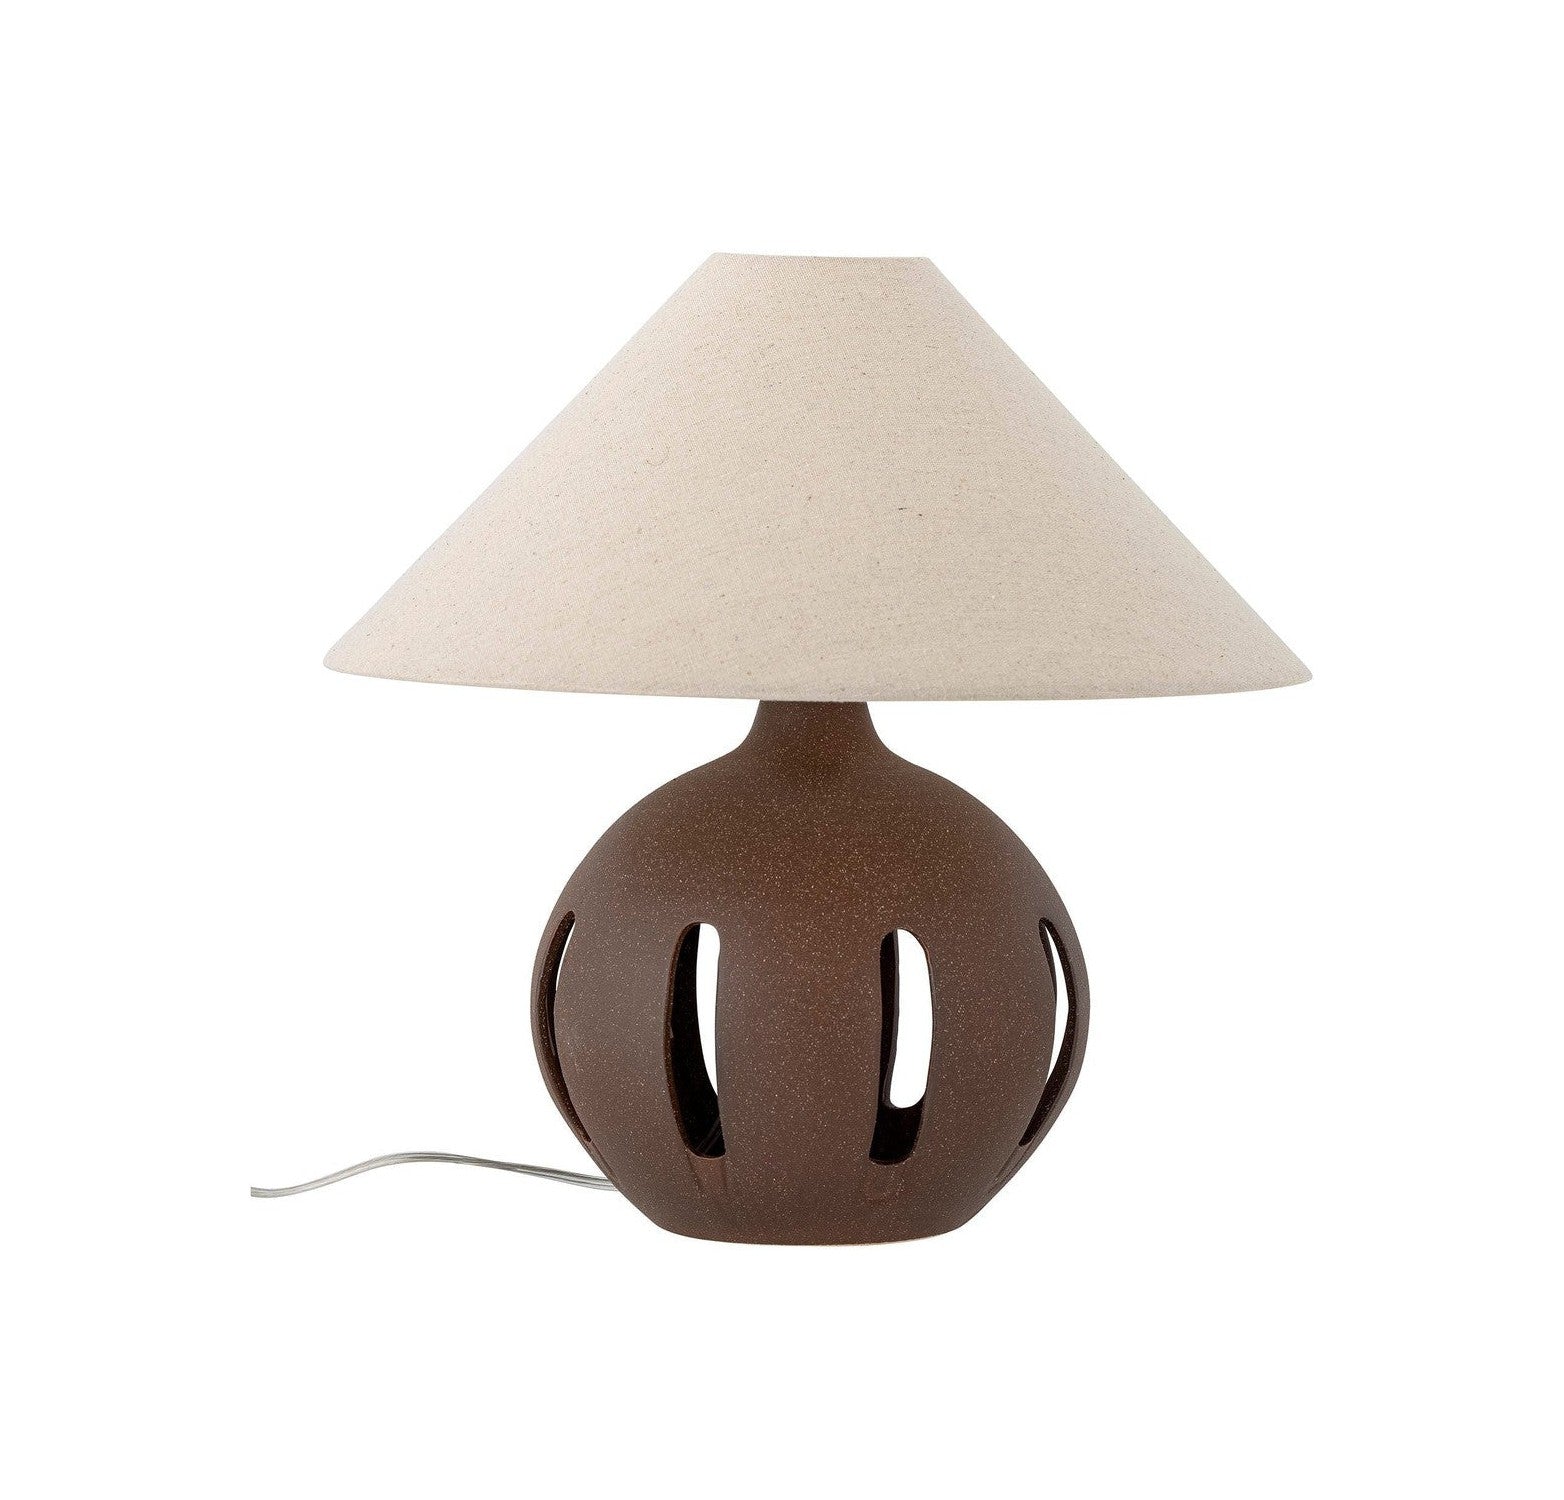 Bloomingville Liana bordlampe, brun, stentøj